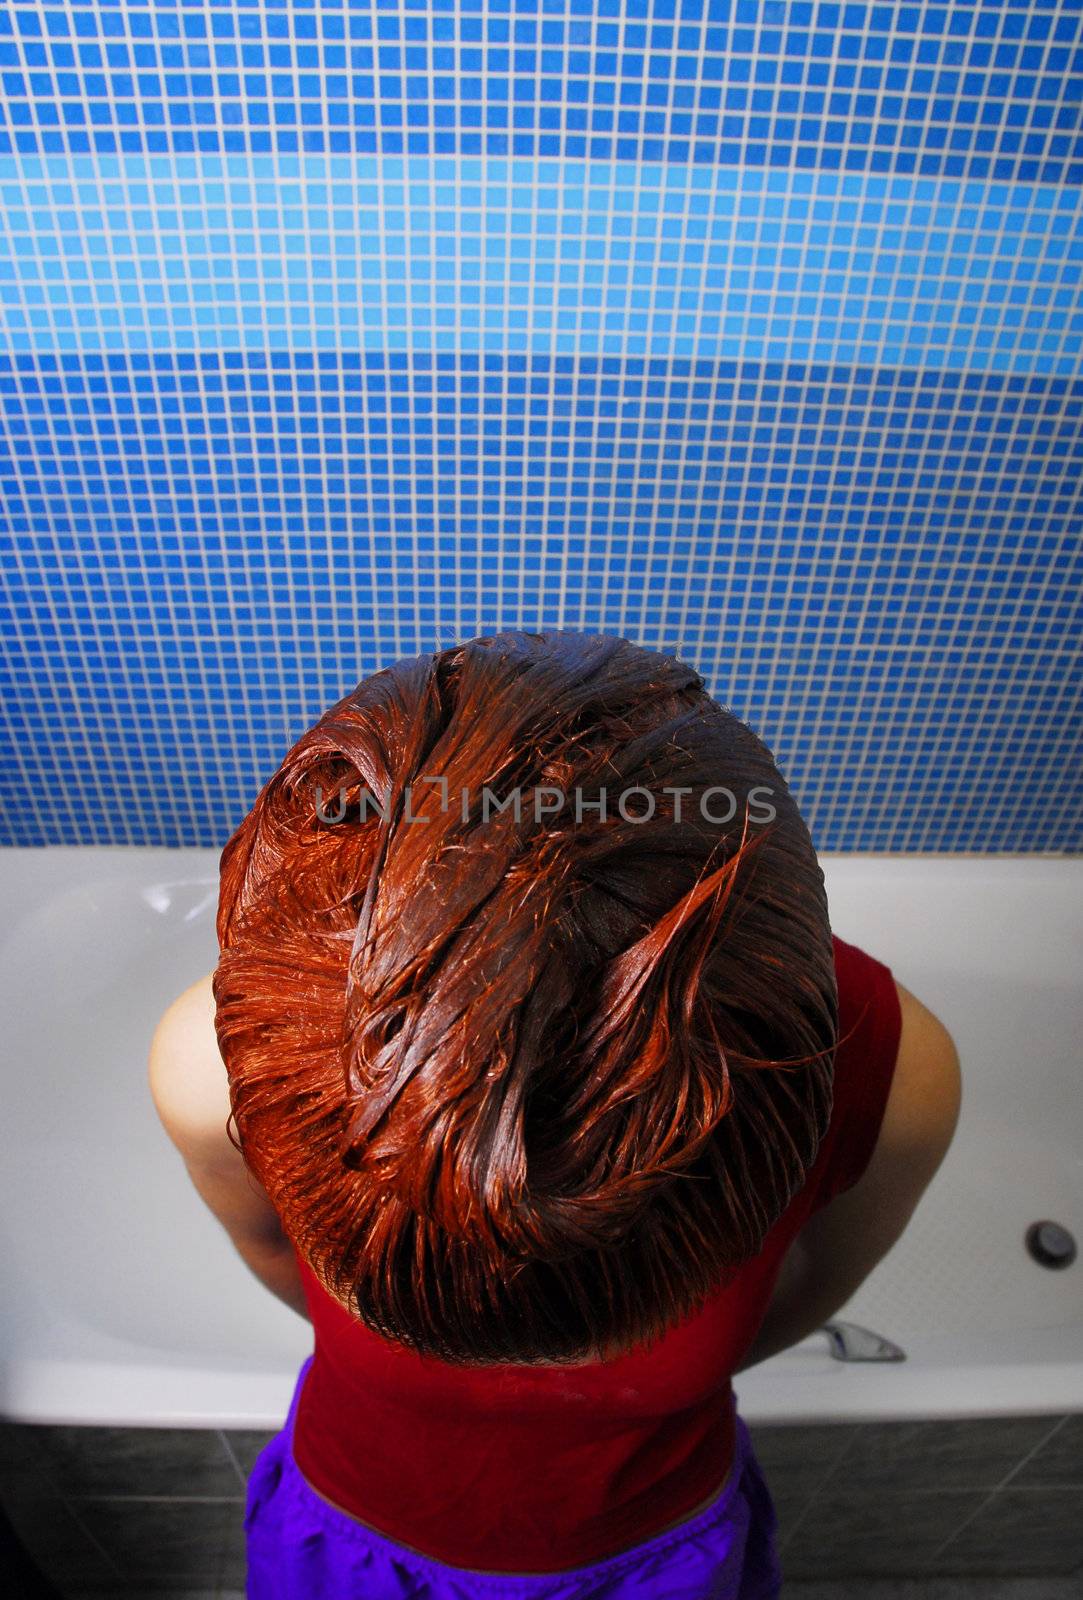 Hair dyeing in bathroom by Mimal